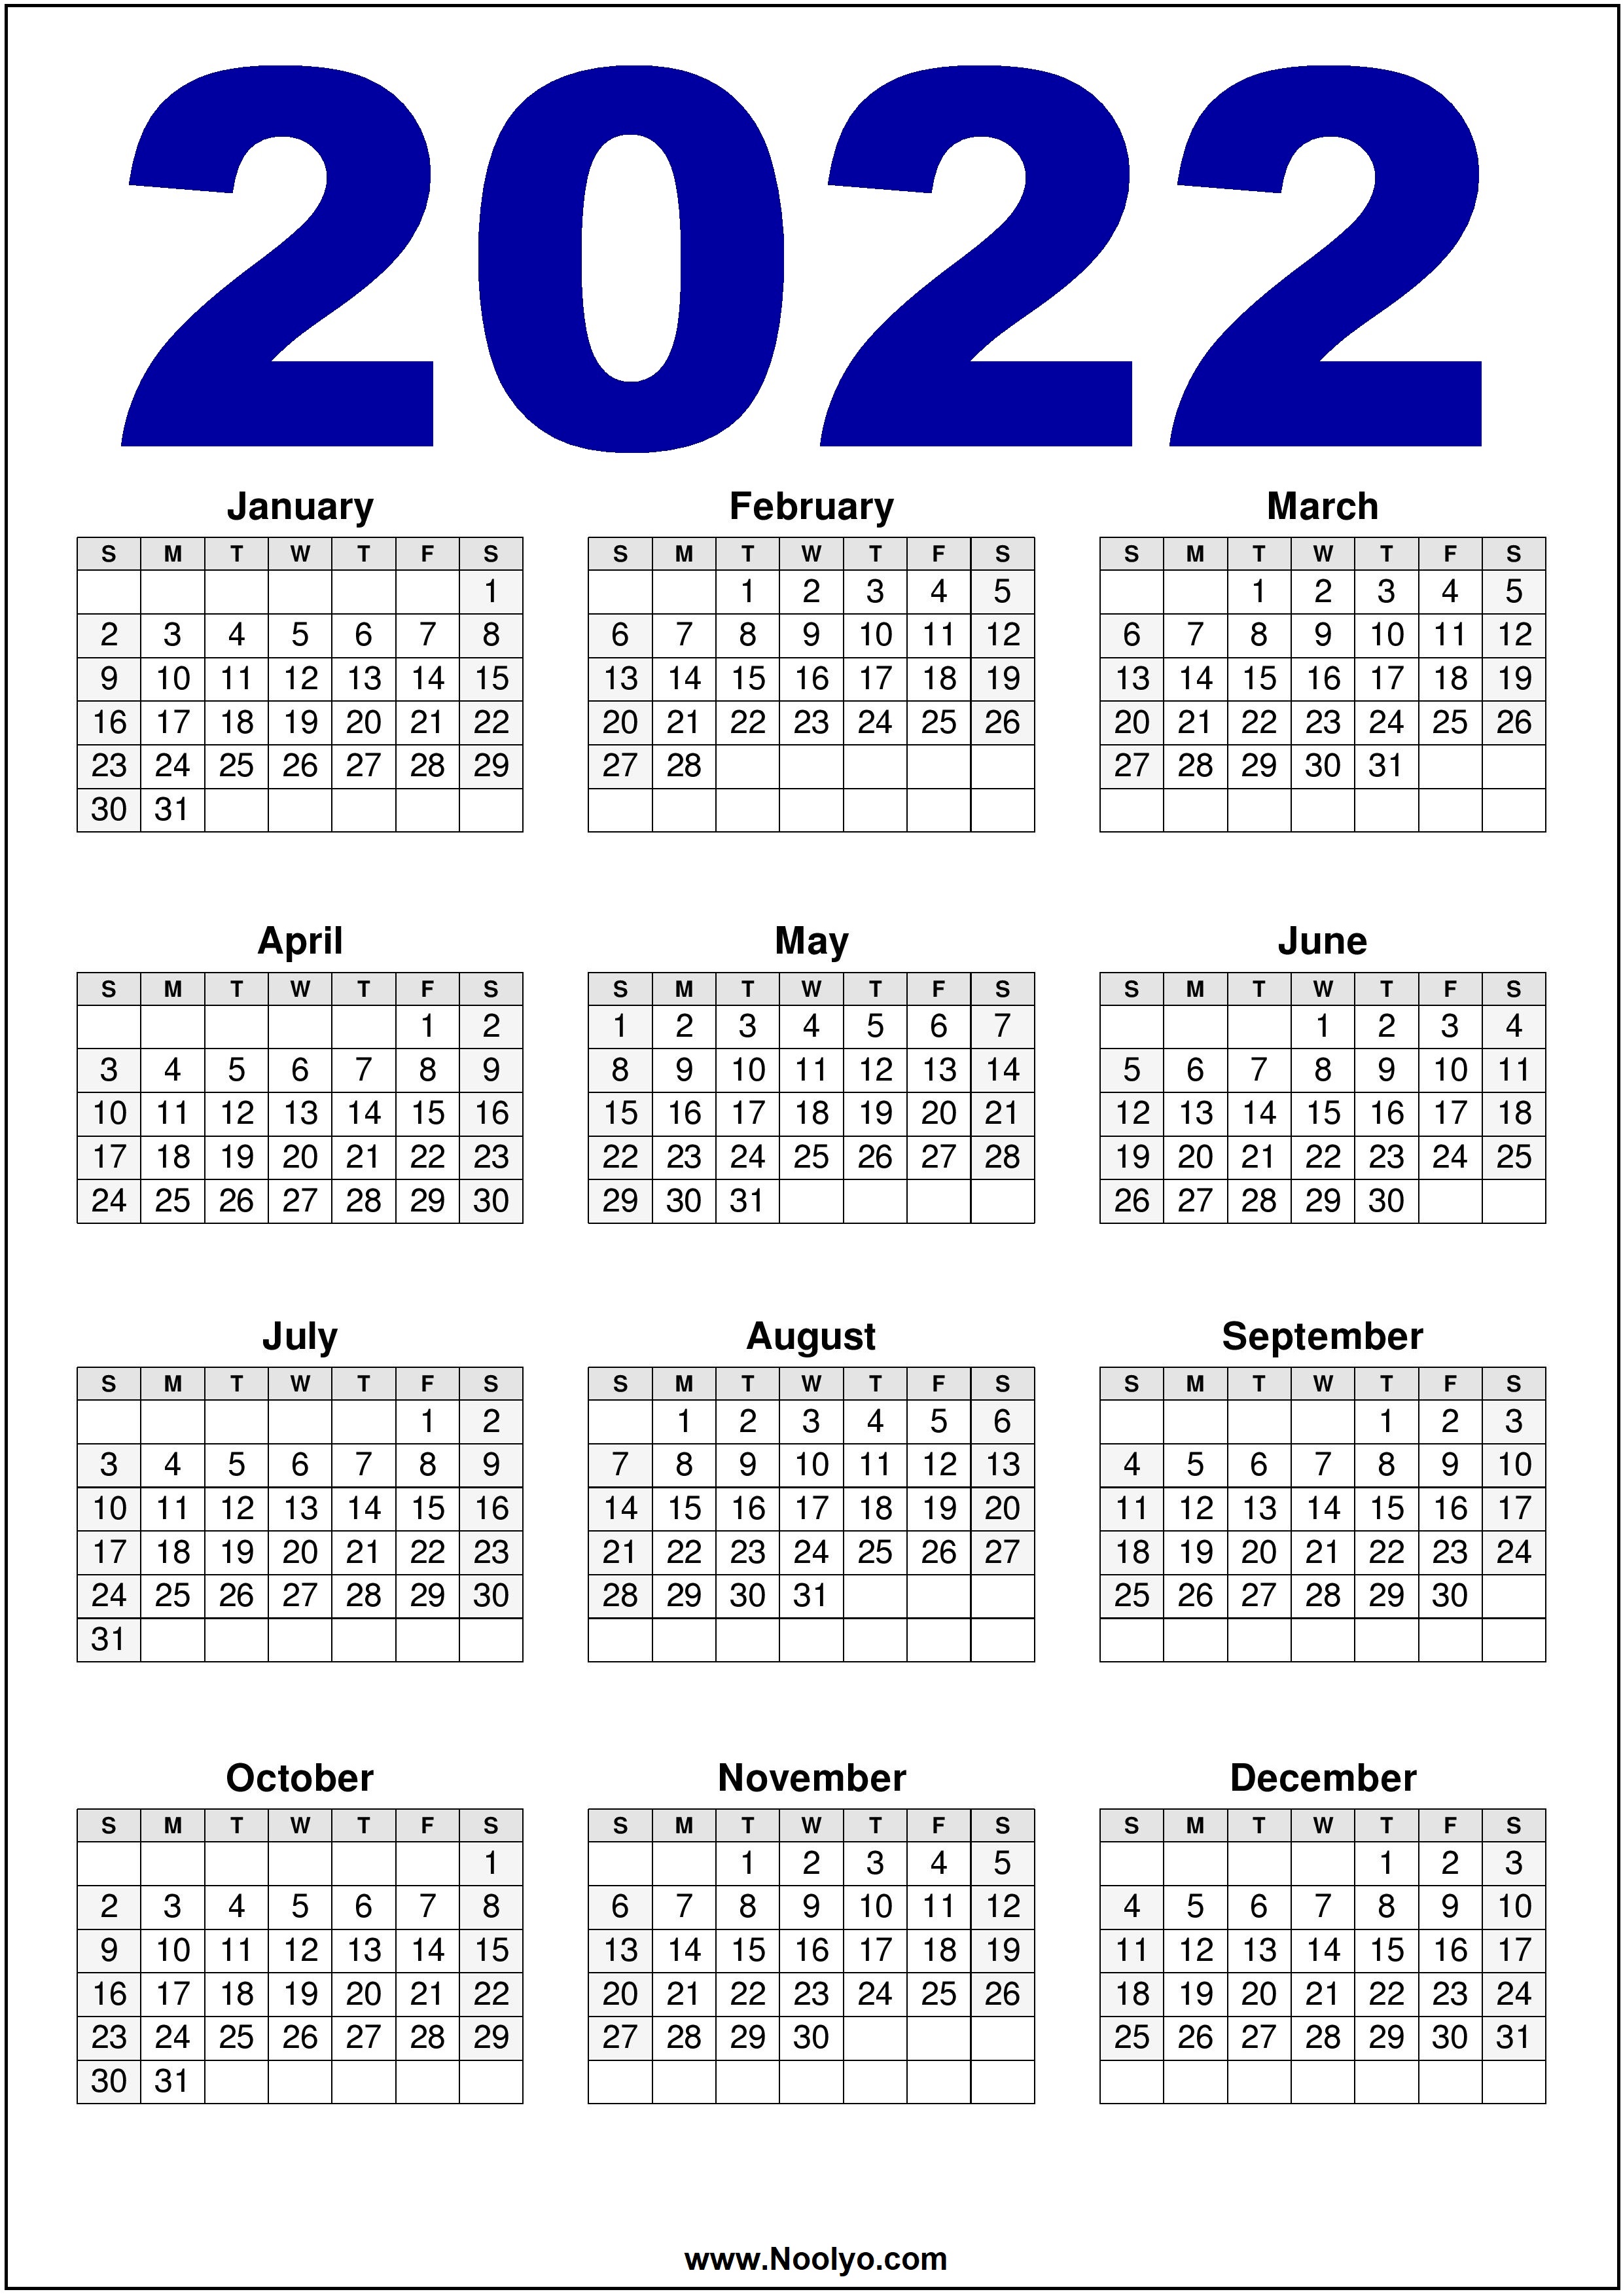 2022-calendar-printable-us-download-free-noolyocom-2022-calendar